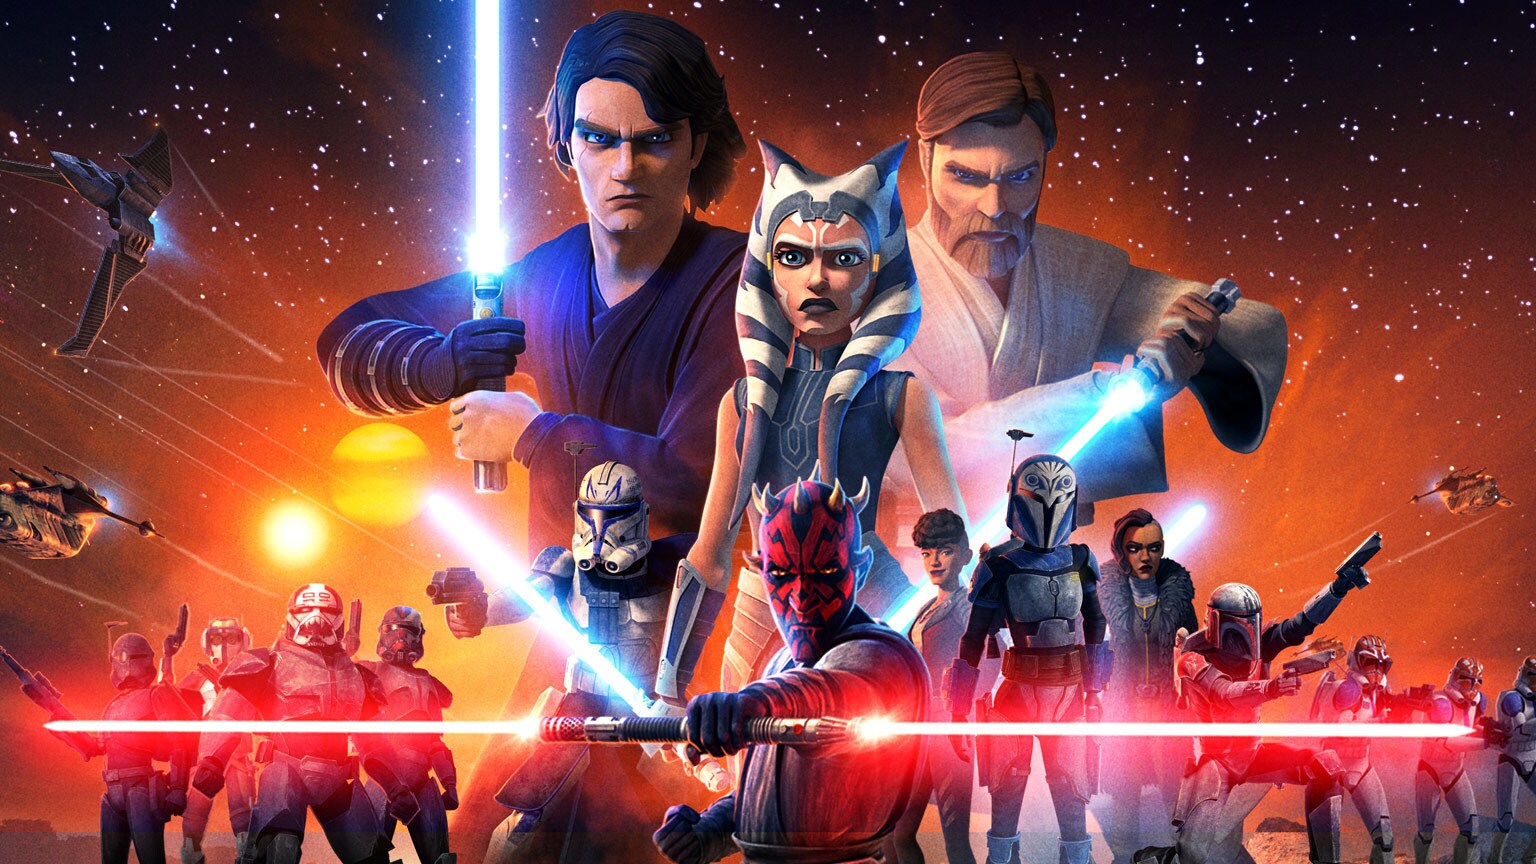 The Final Season of Star Wars: The Clone Wars Begins!